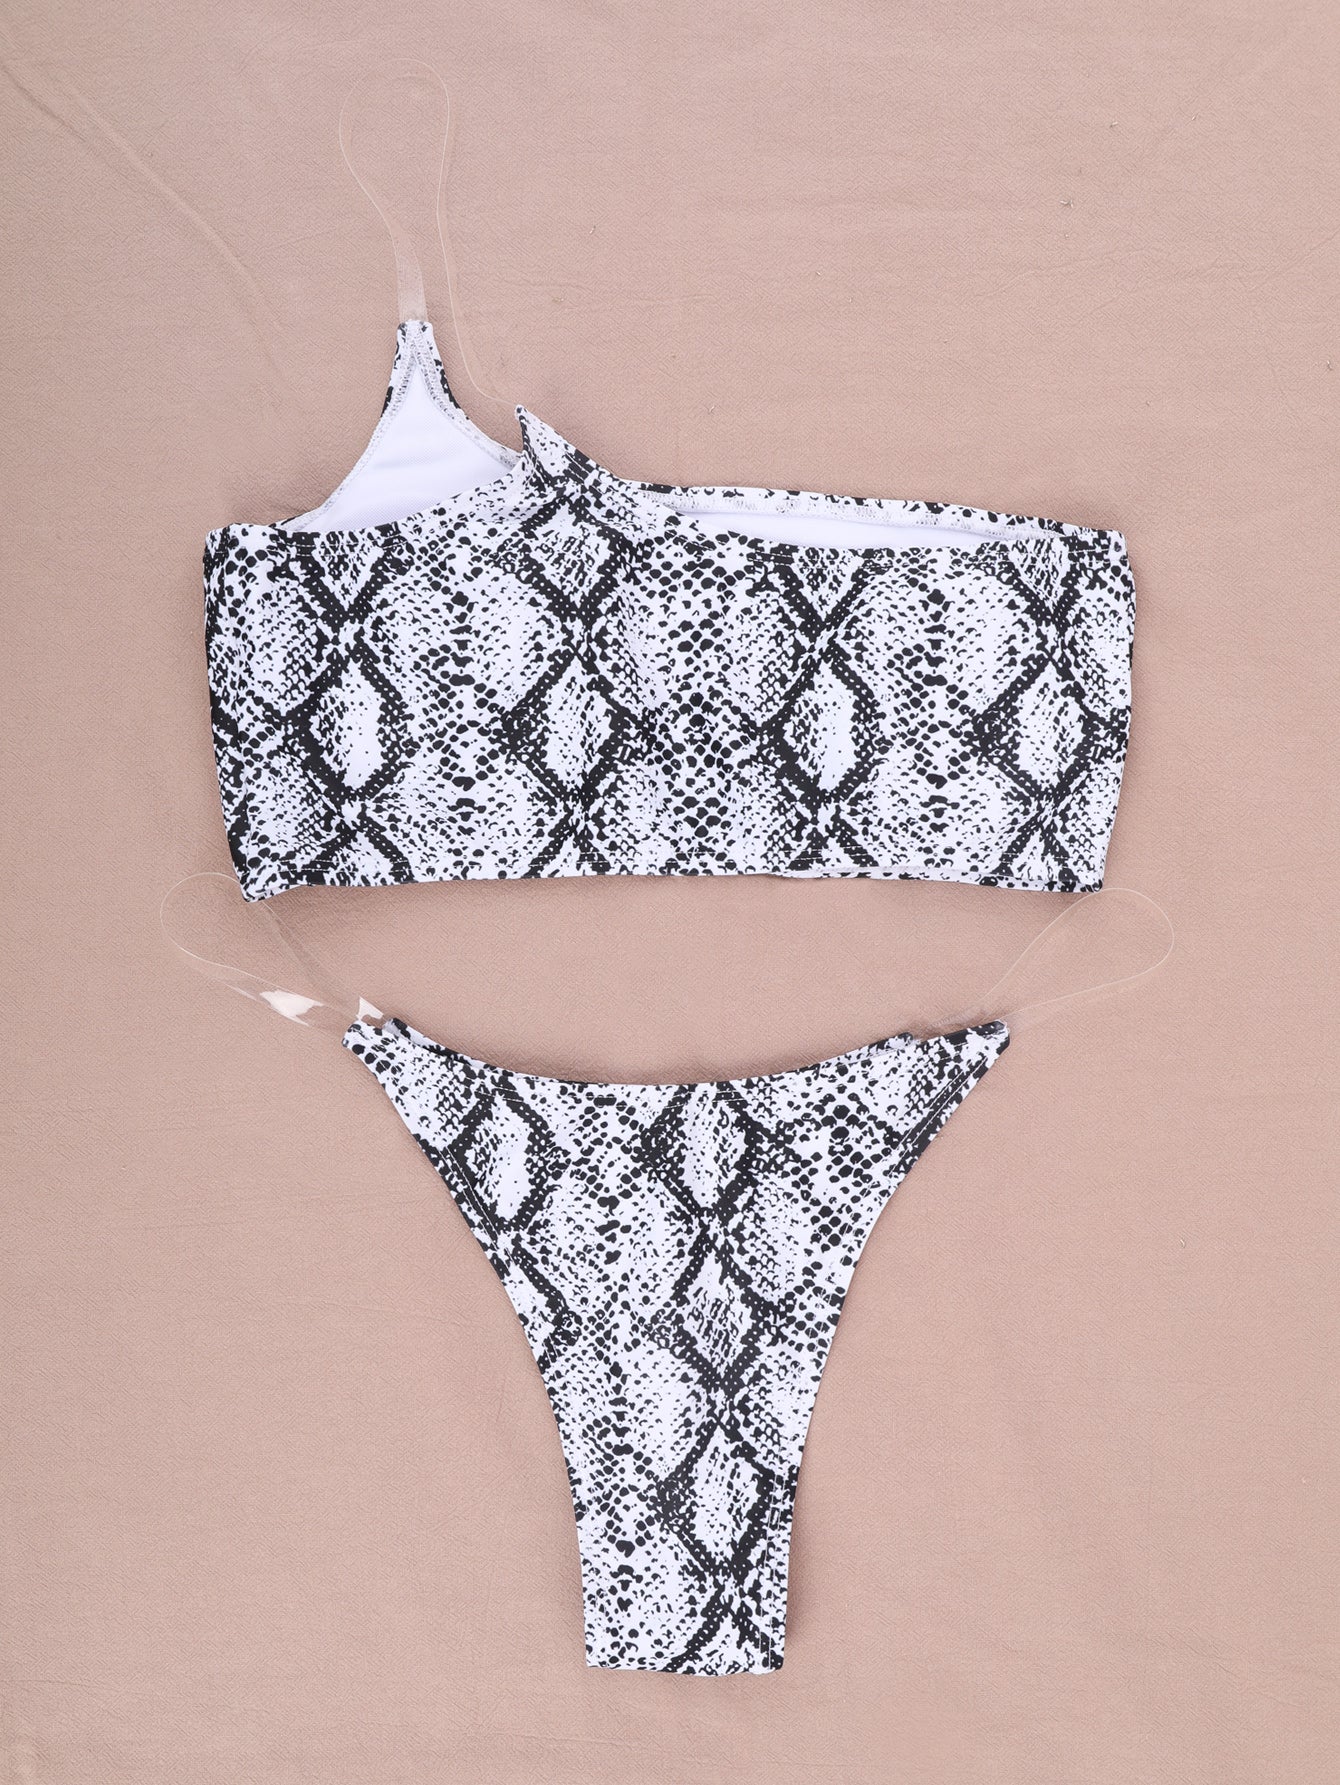 Serpentine Snake Print Strapless Thong Bikini Two Piece Swimwear